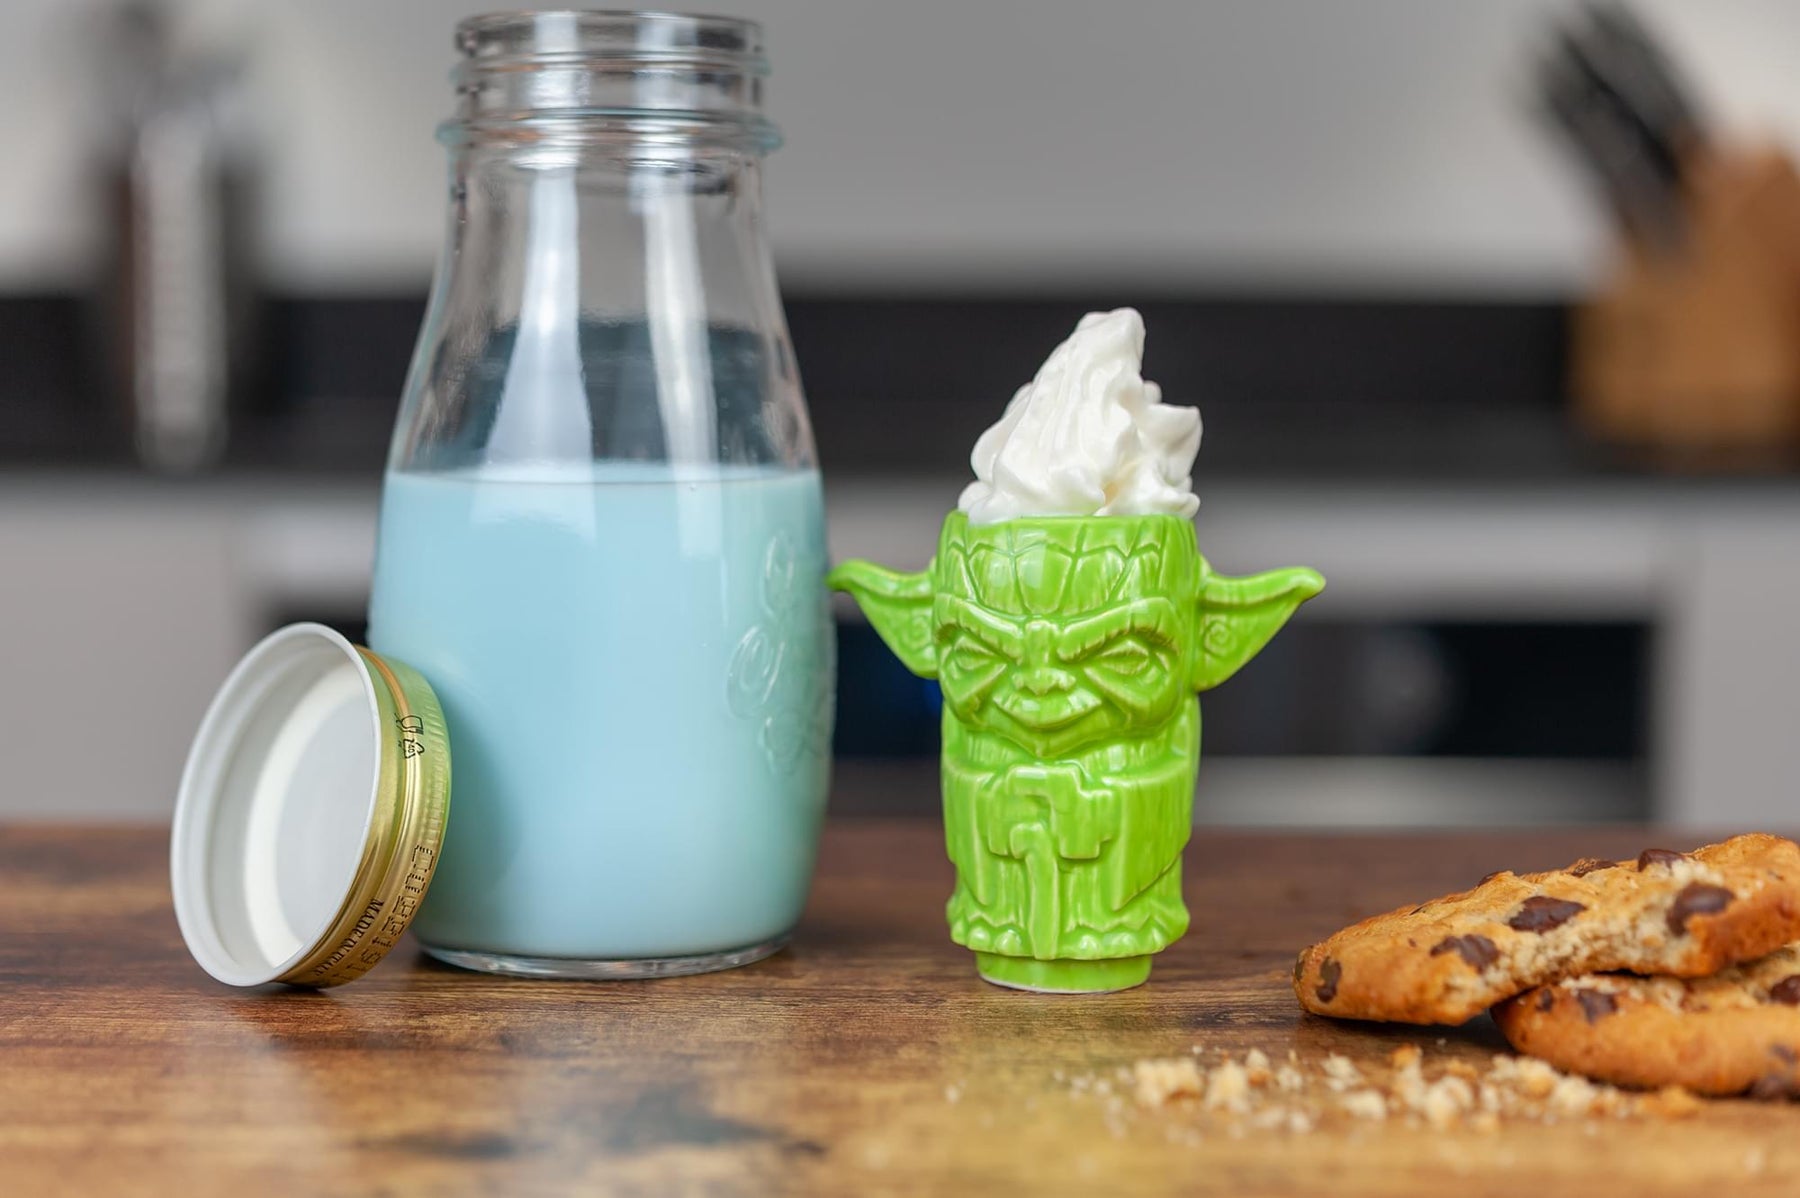 Geeki Tikis Star Wars Master Yoda Ceramic Mini Muglet | Holds 2 Ounces